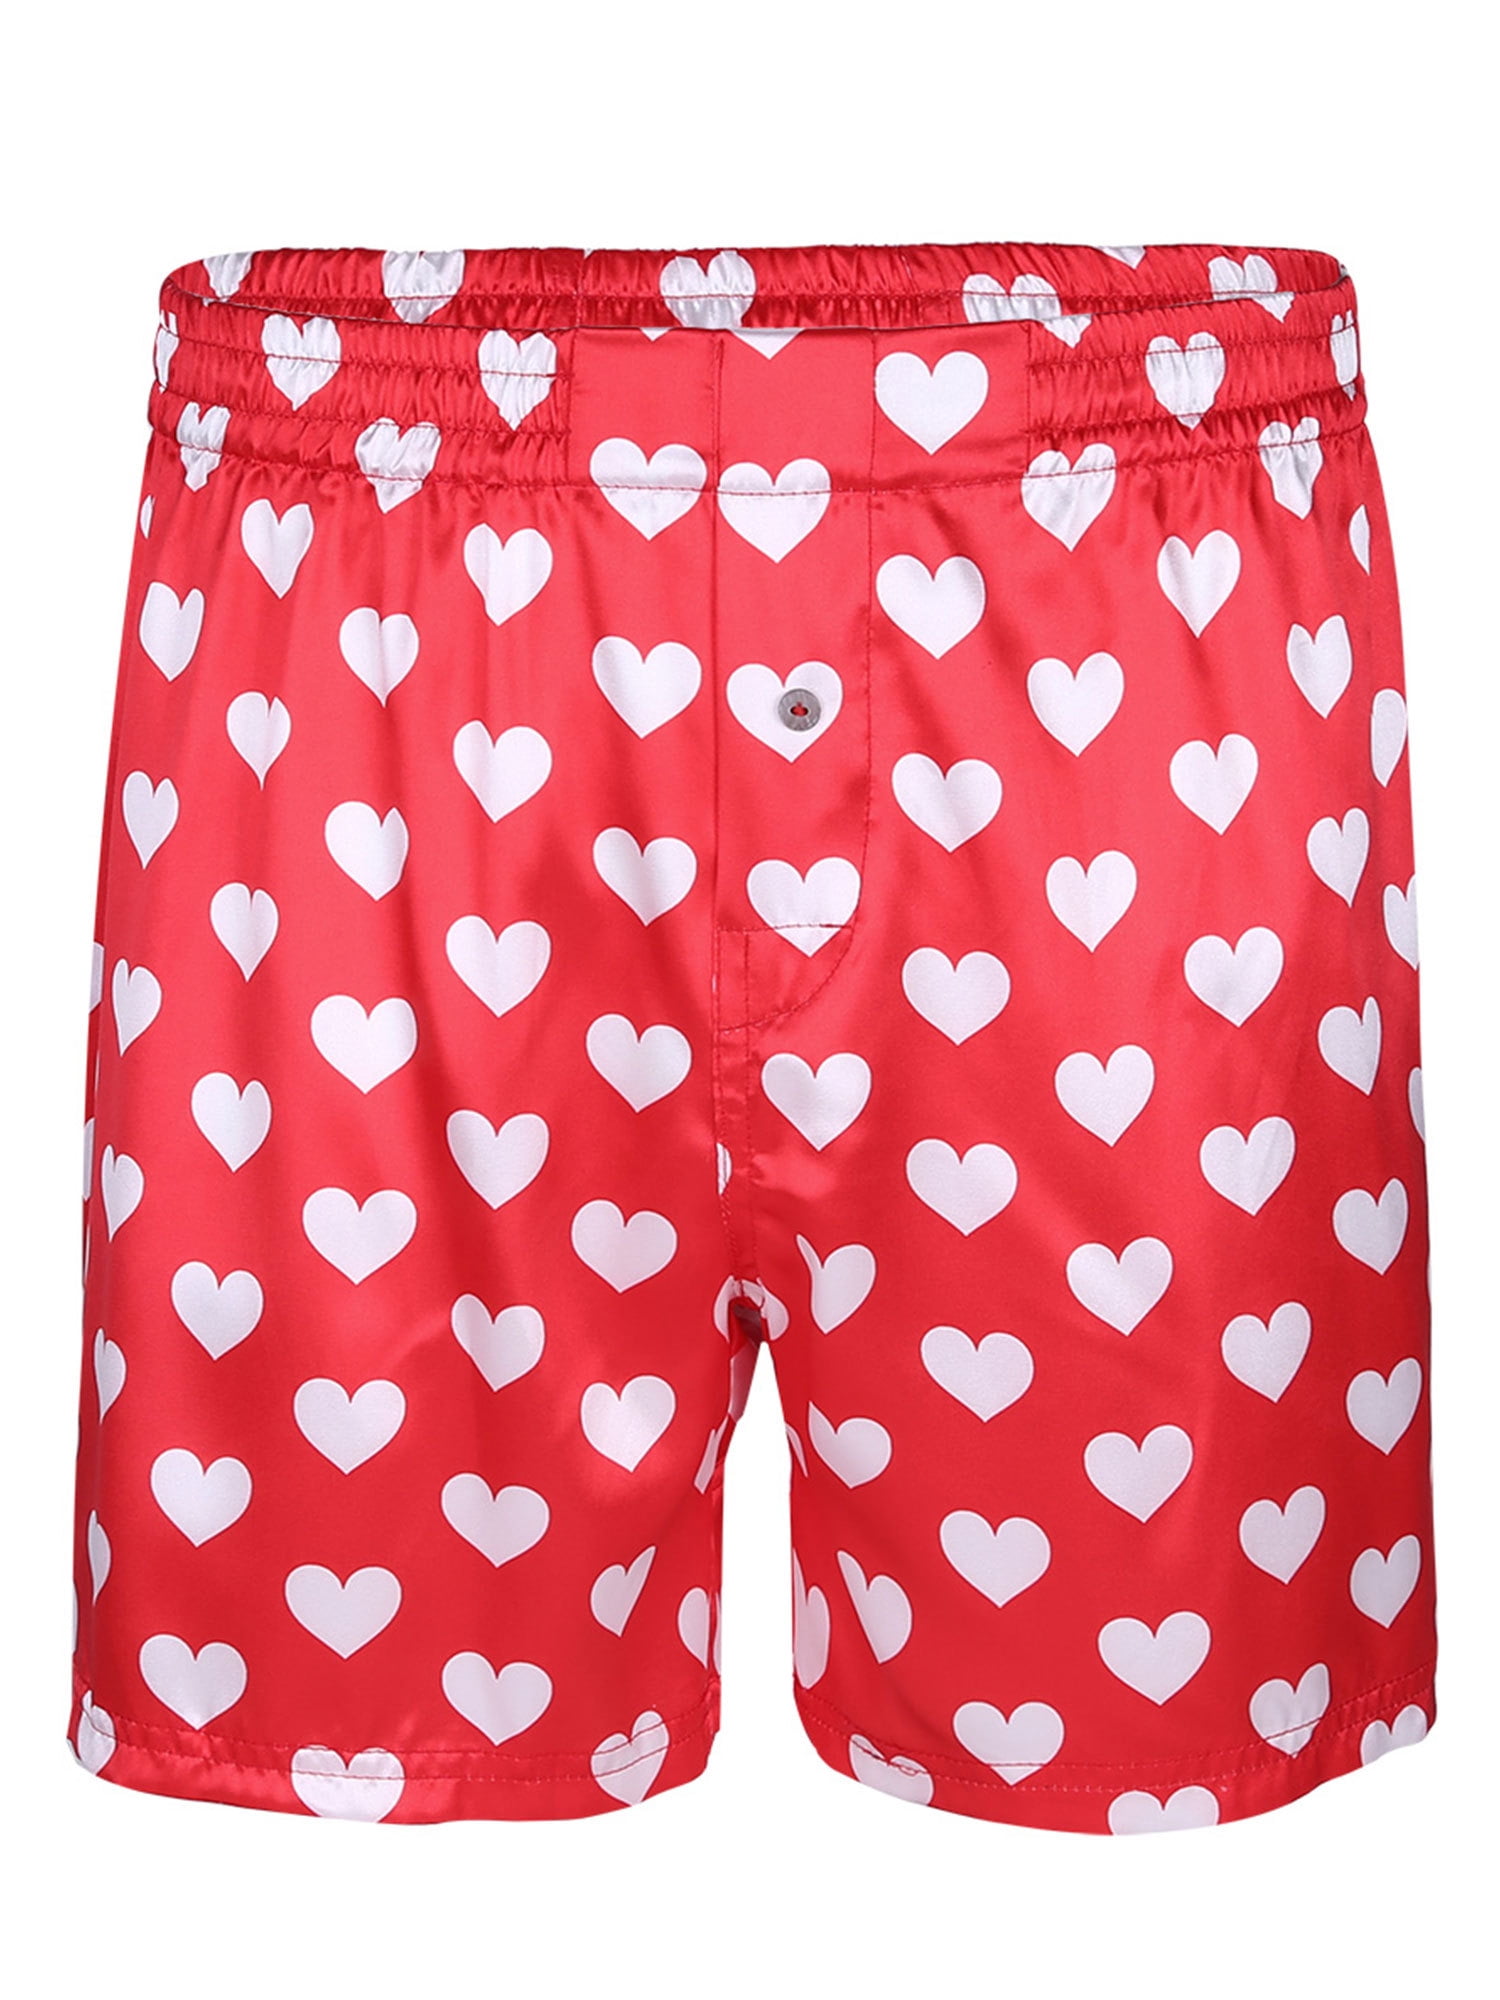 iiniim Men's Silky Satin Heart Printed Boxer Shorts Lingerie Underwear ...